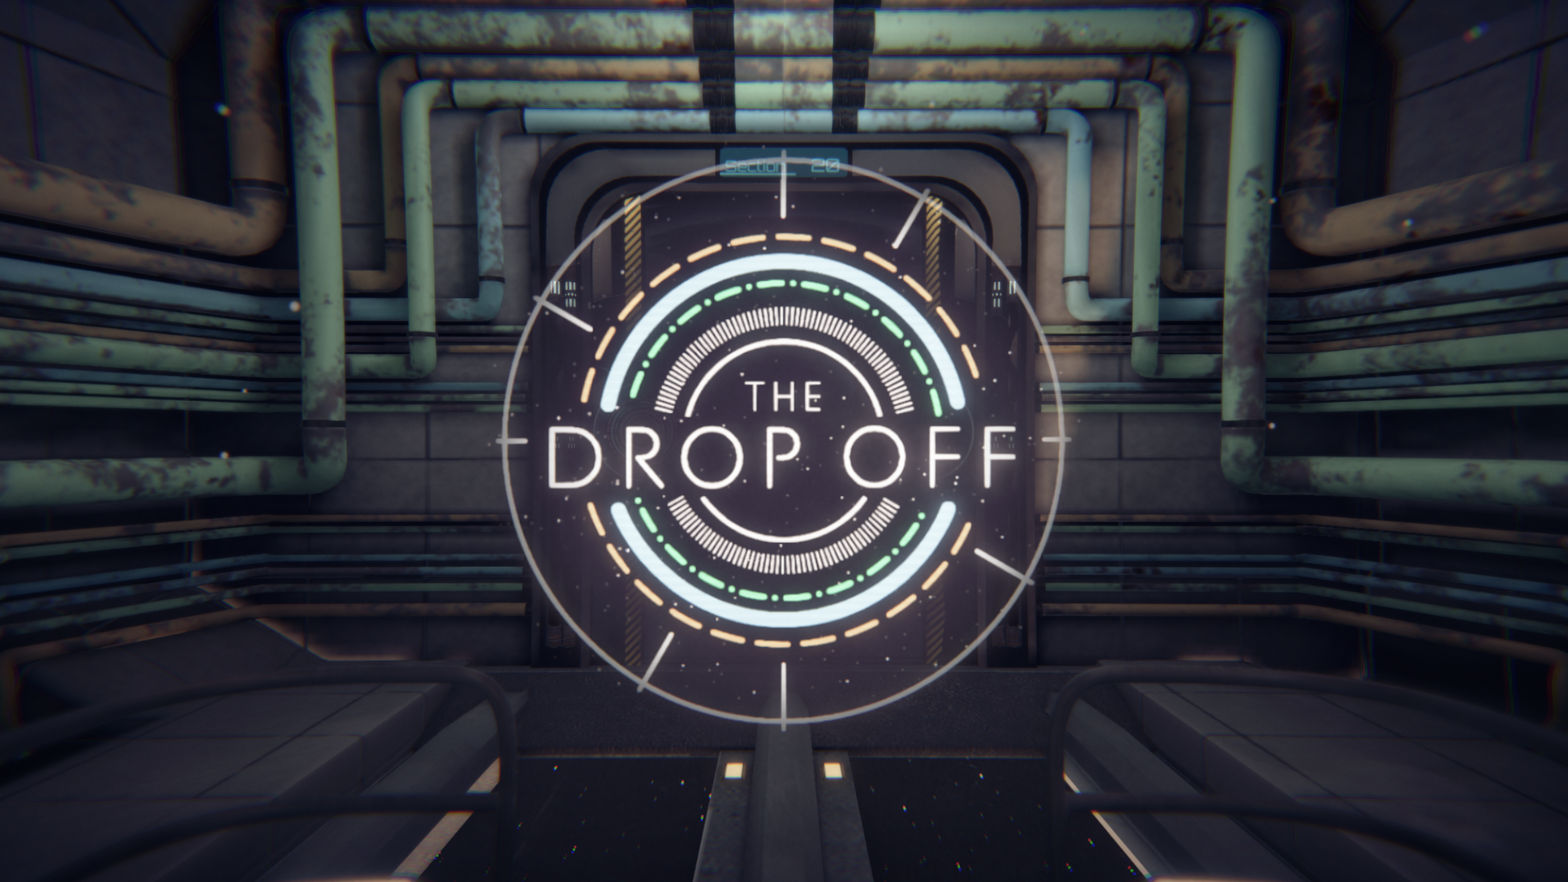 The Drop Off